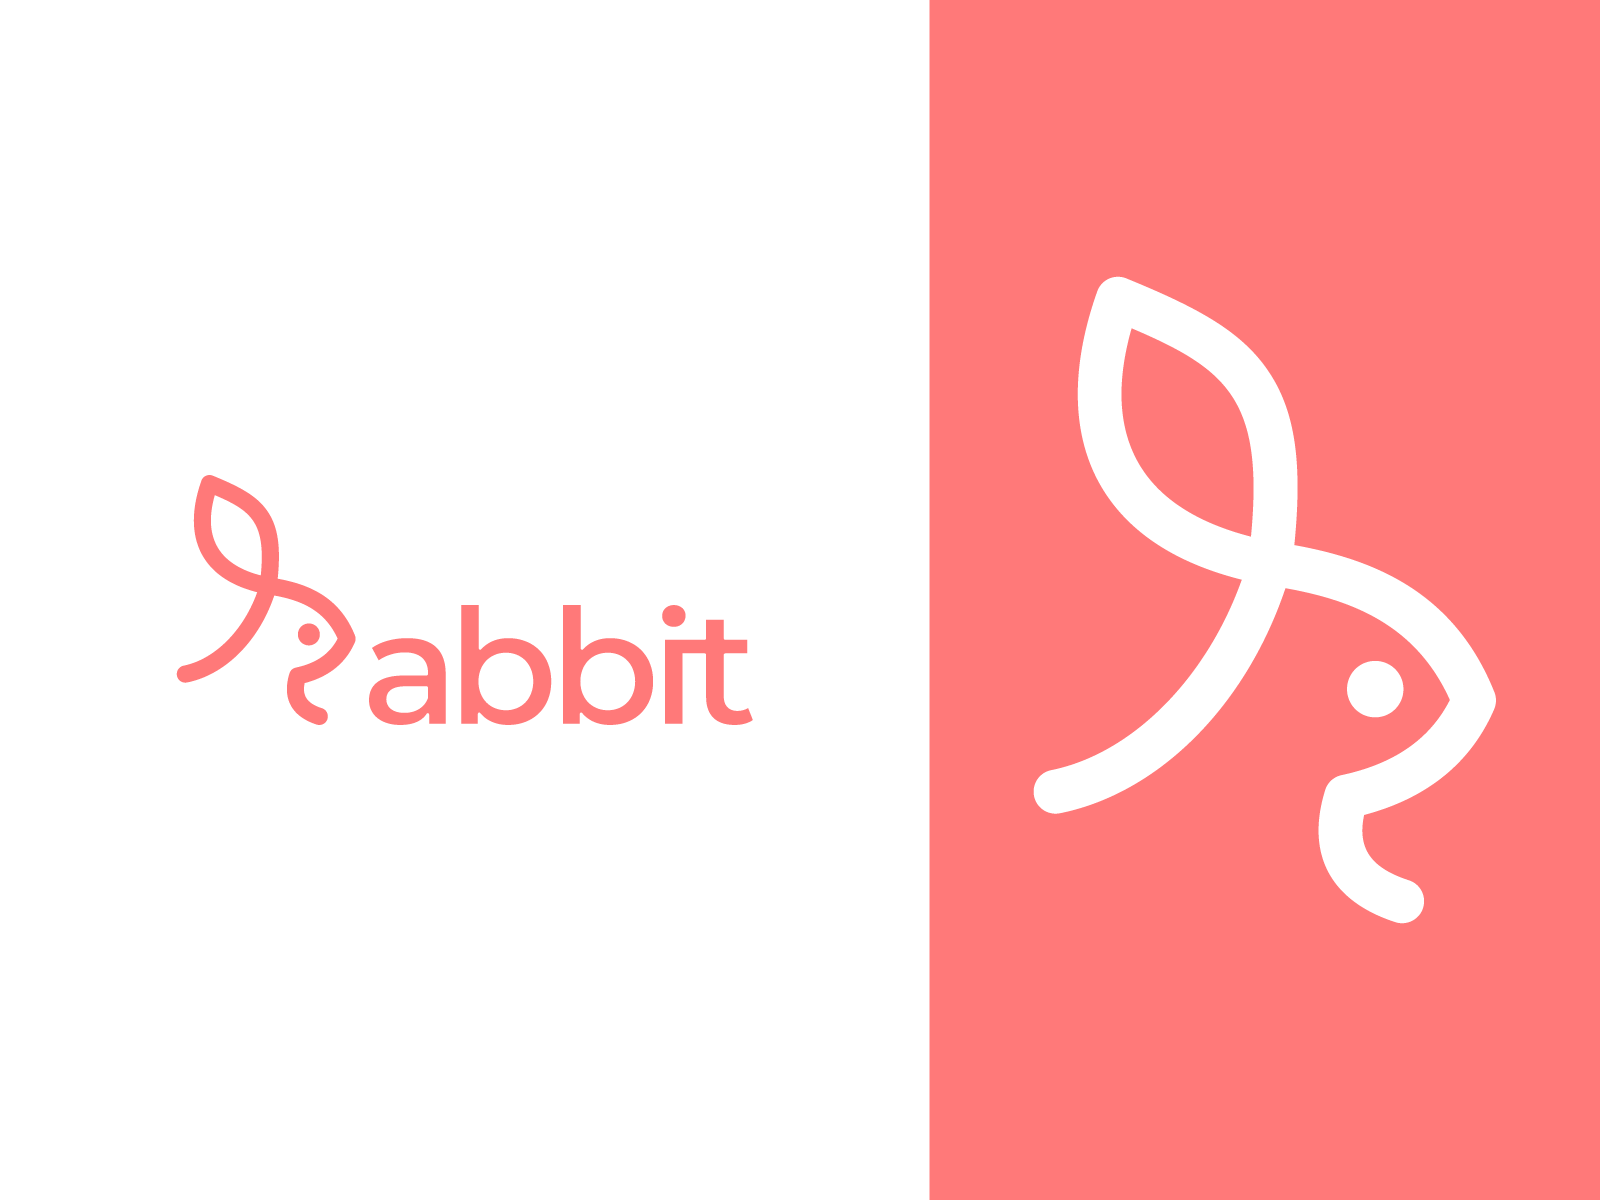 Rabbit - Logomark bunny logo rabbit